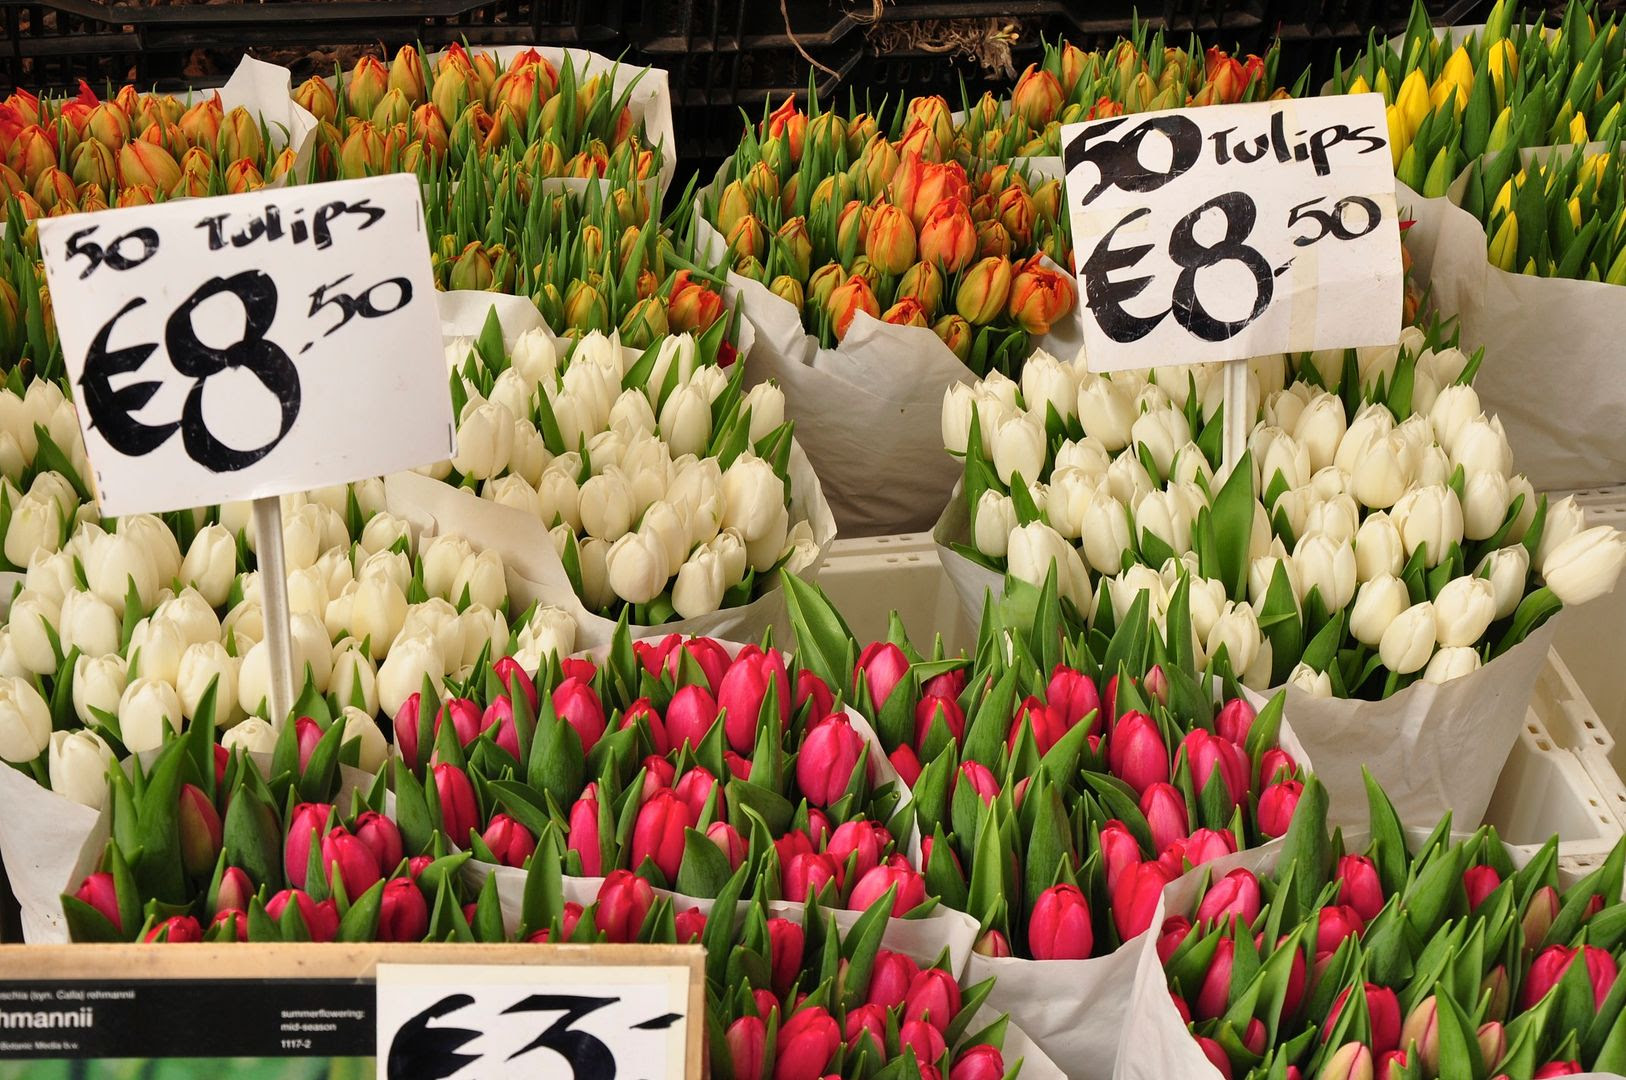 18.04.12, The flower market in Amsterdam.